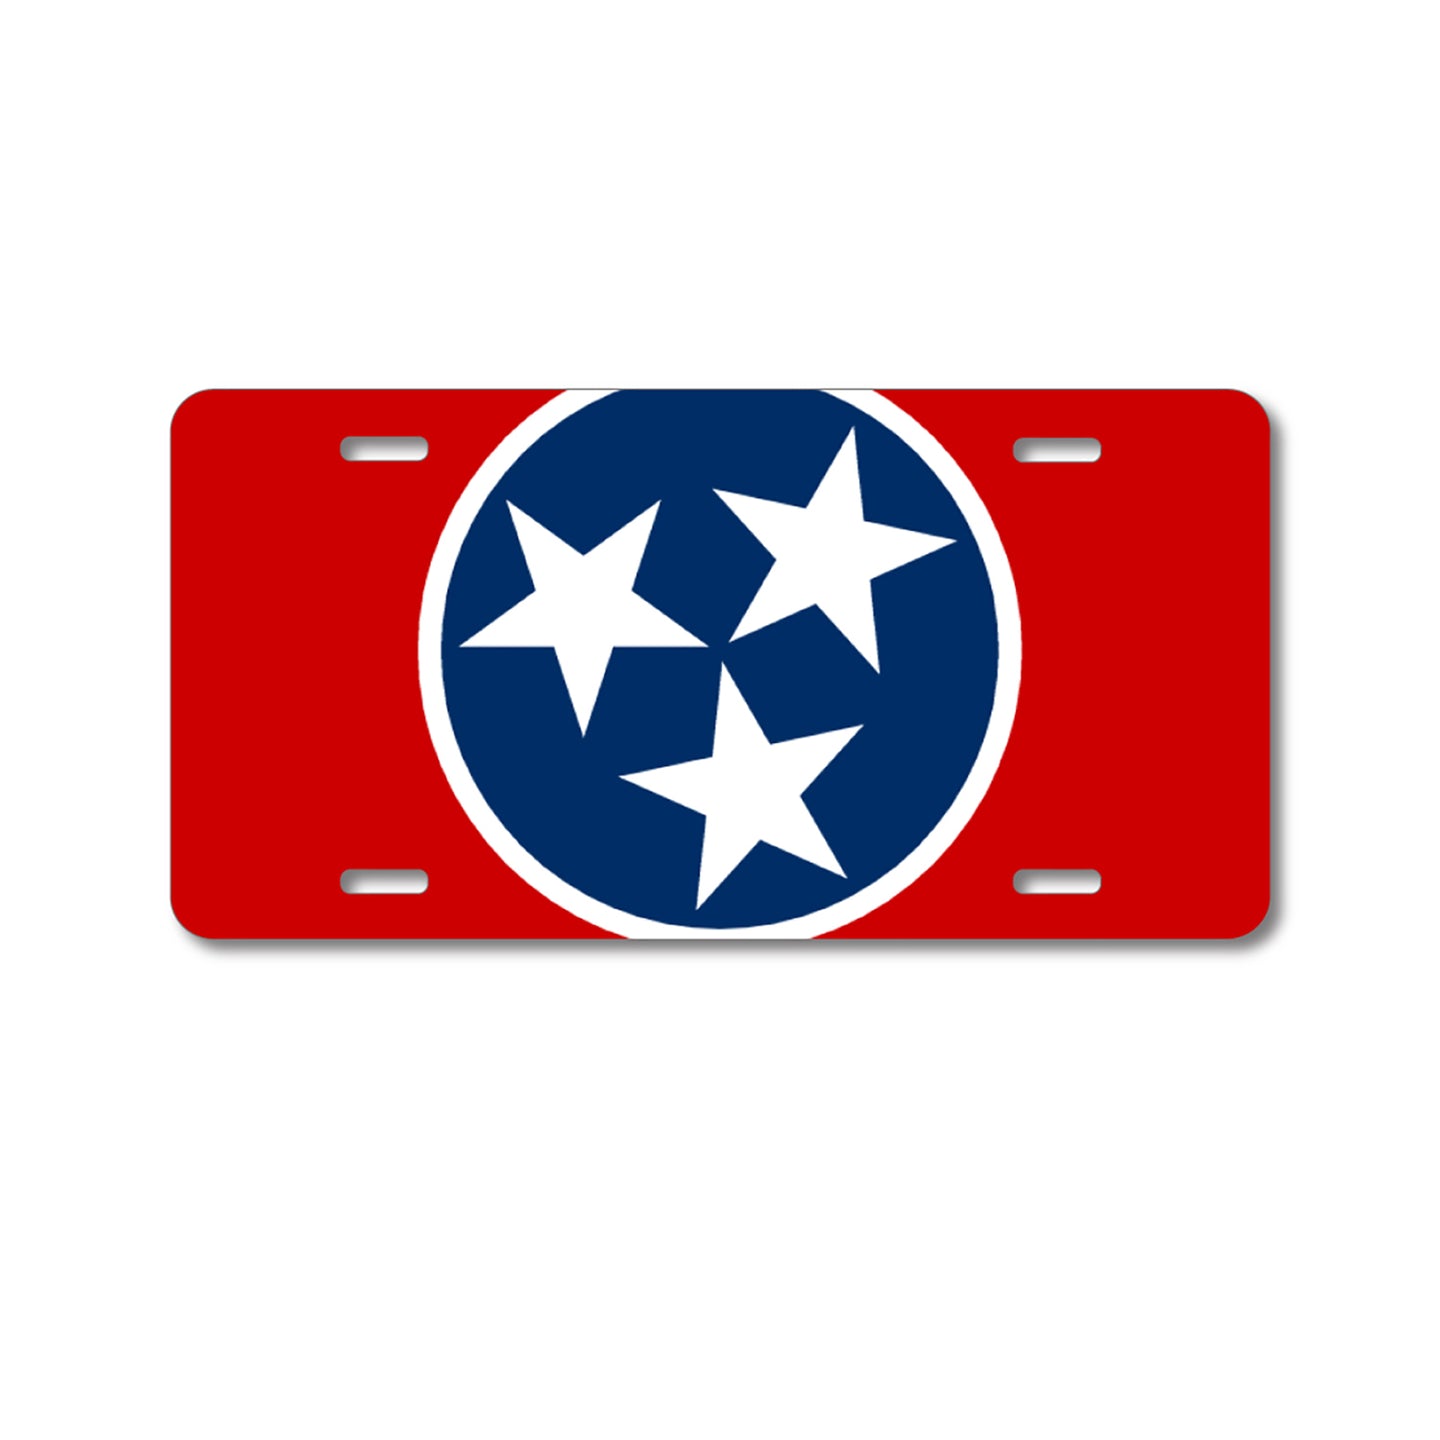 DistinctInk Custom Aluminum Decorative Vanity Front License Plate - Tennessee State Flag